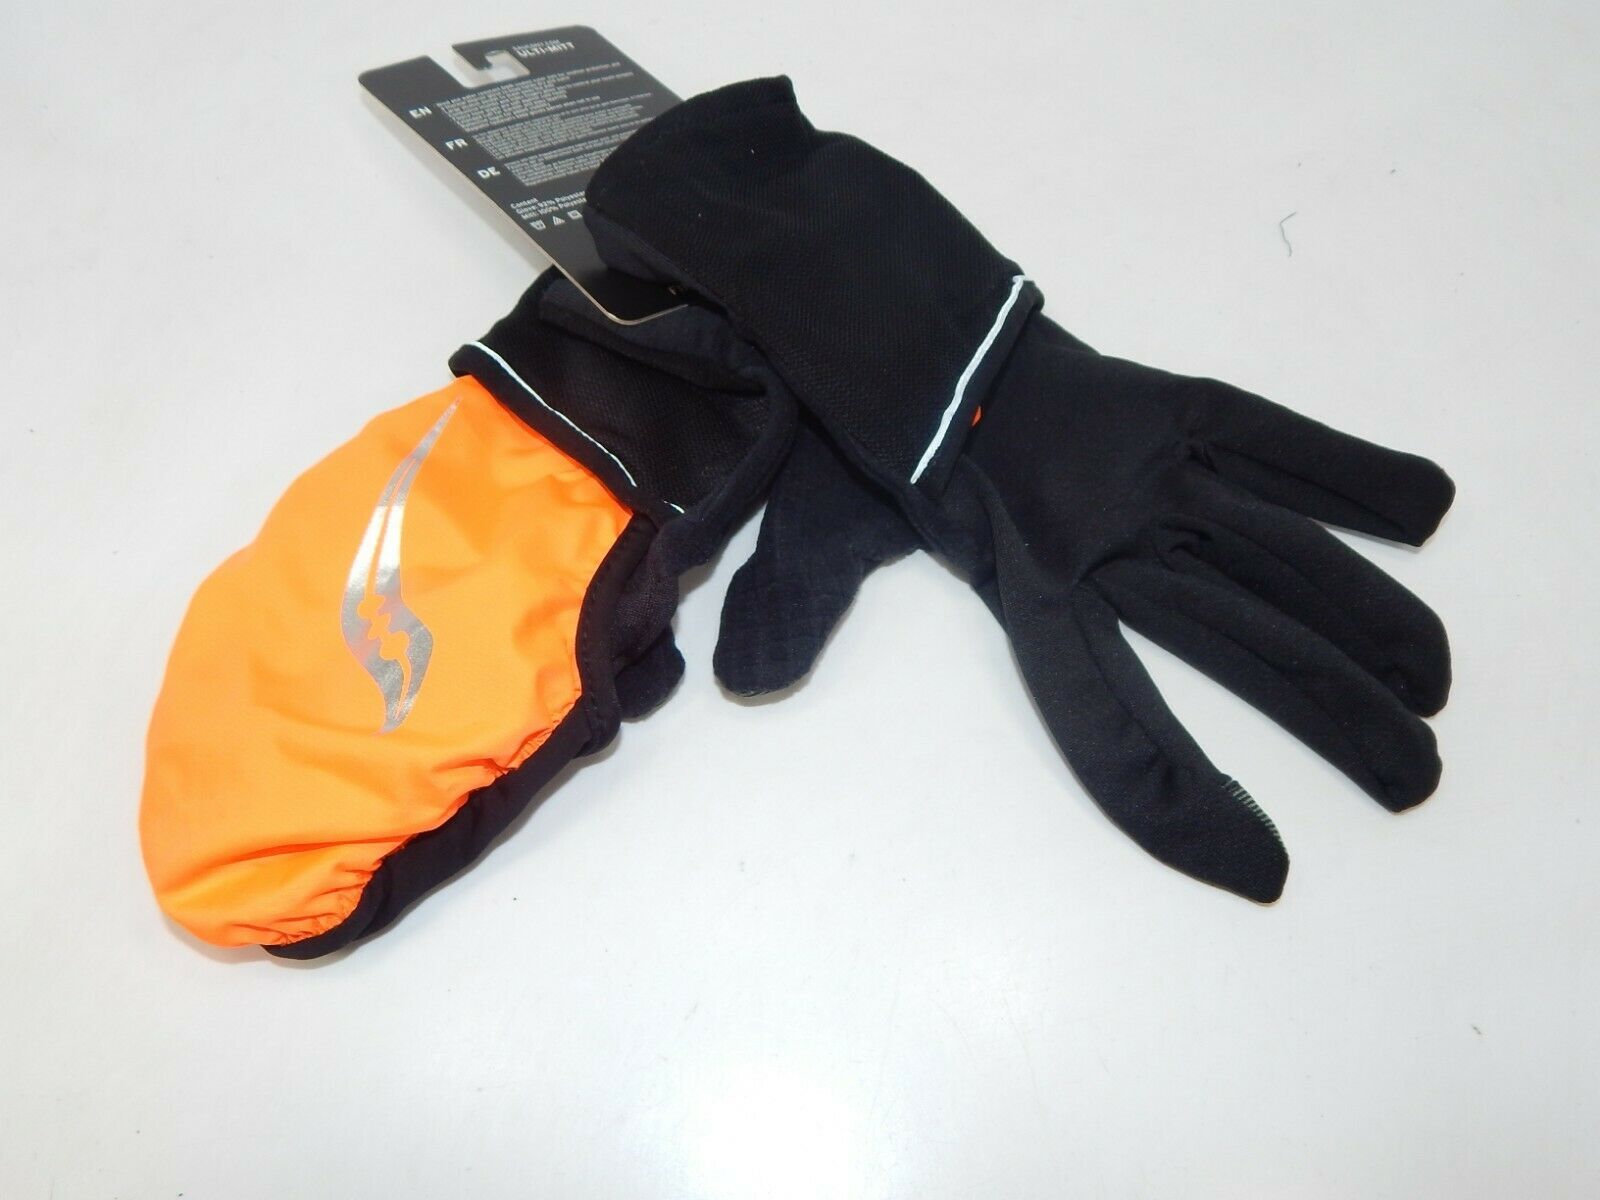 saucony gloves